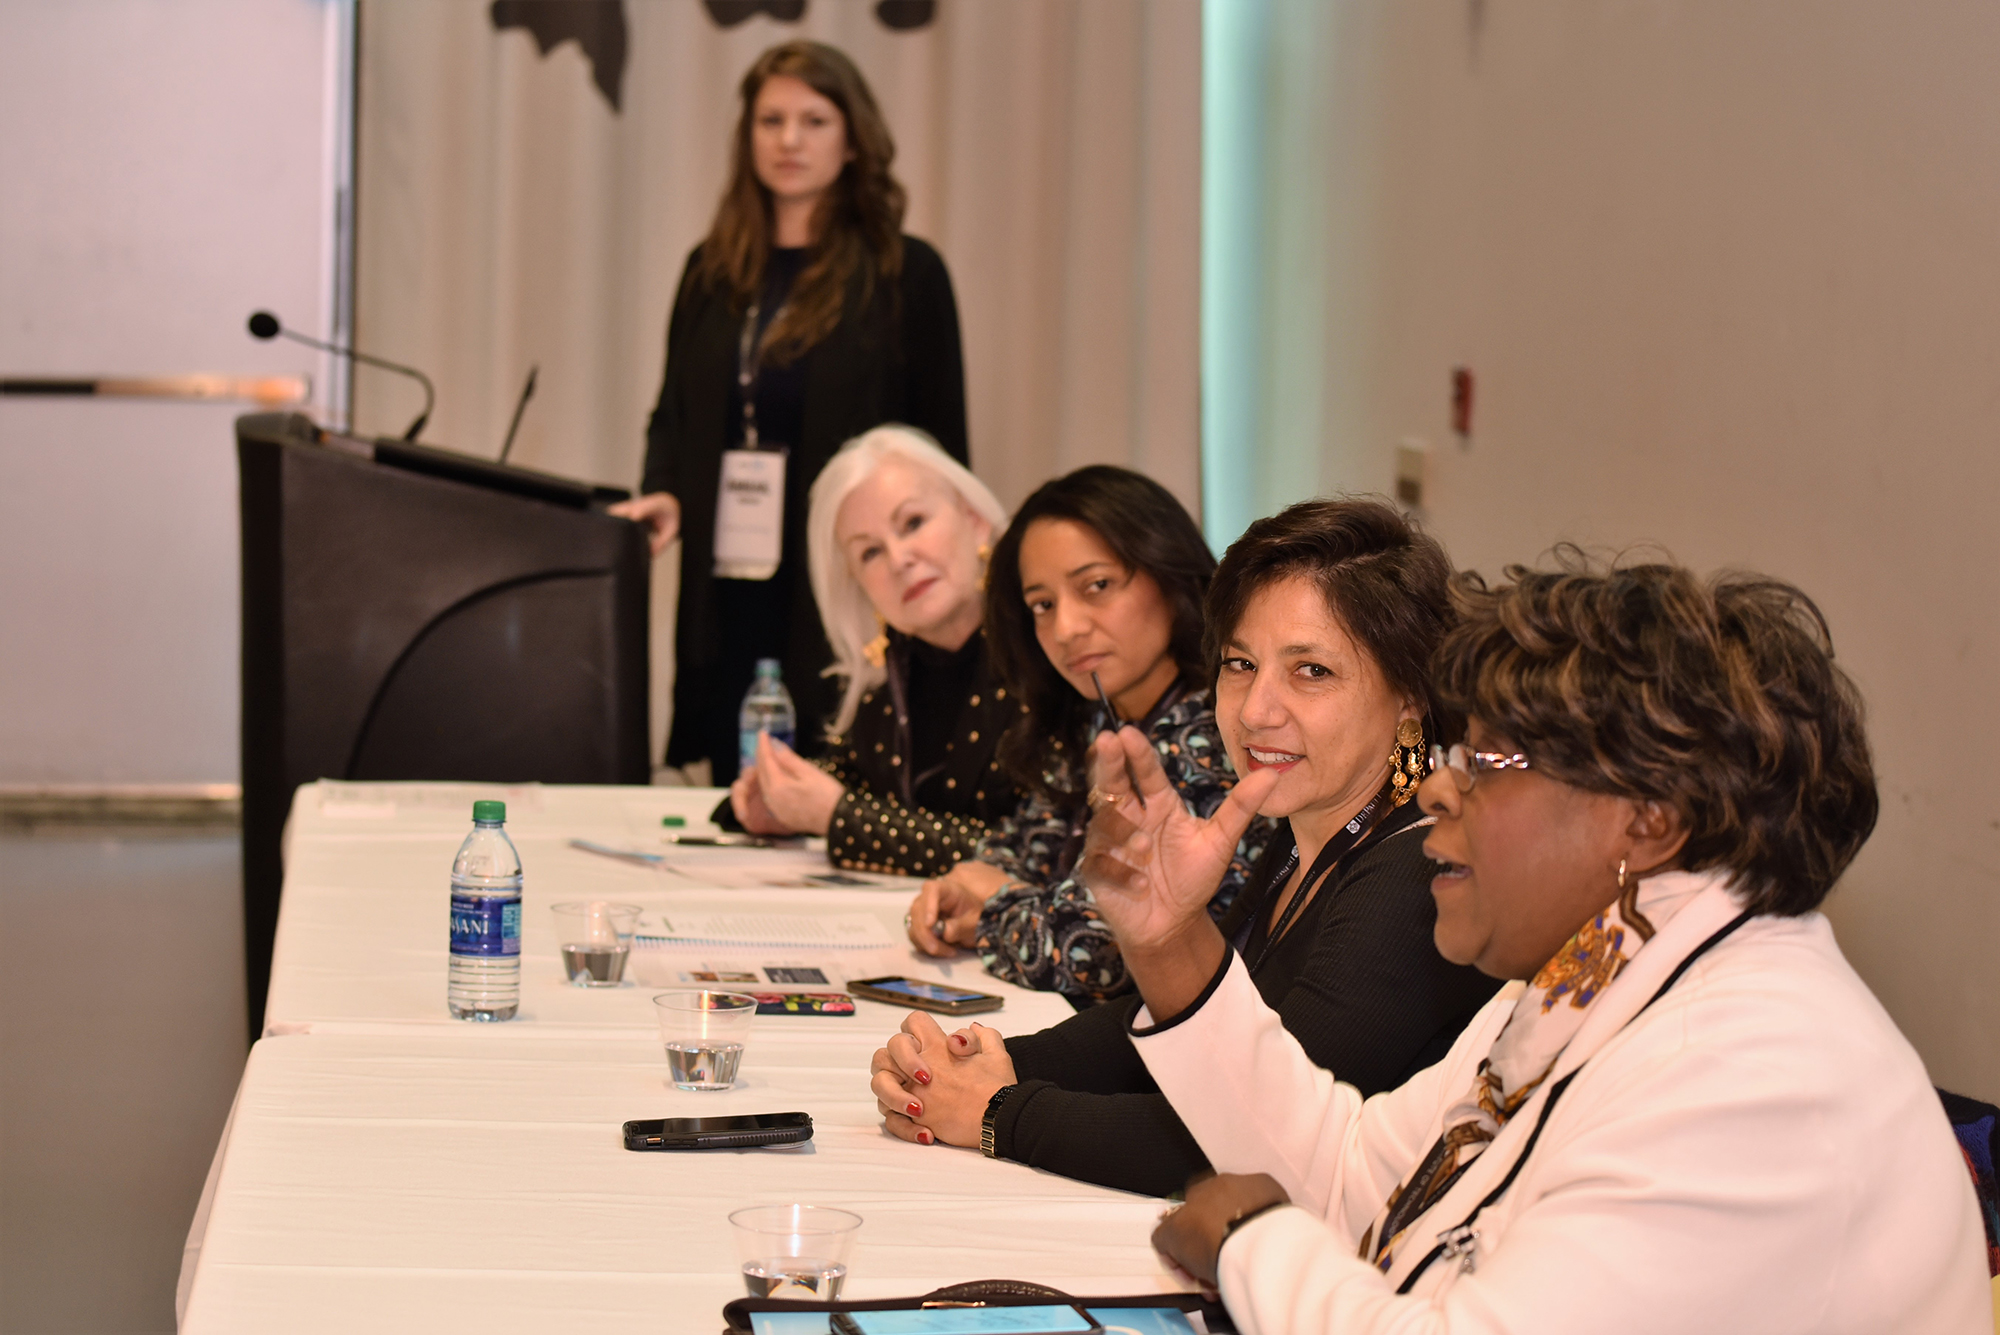 Women in Entrepreneurship panel discussion